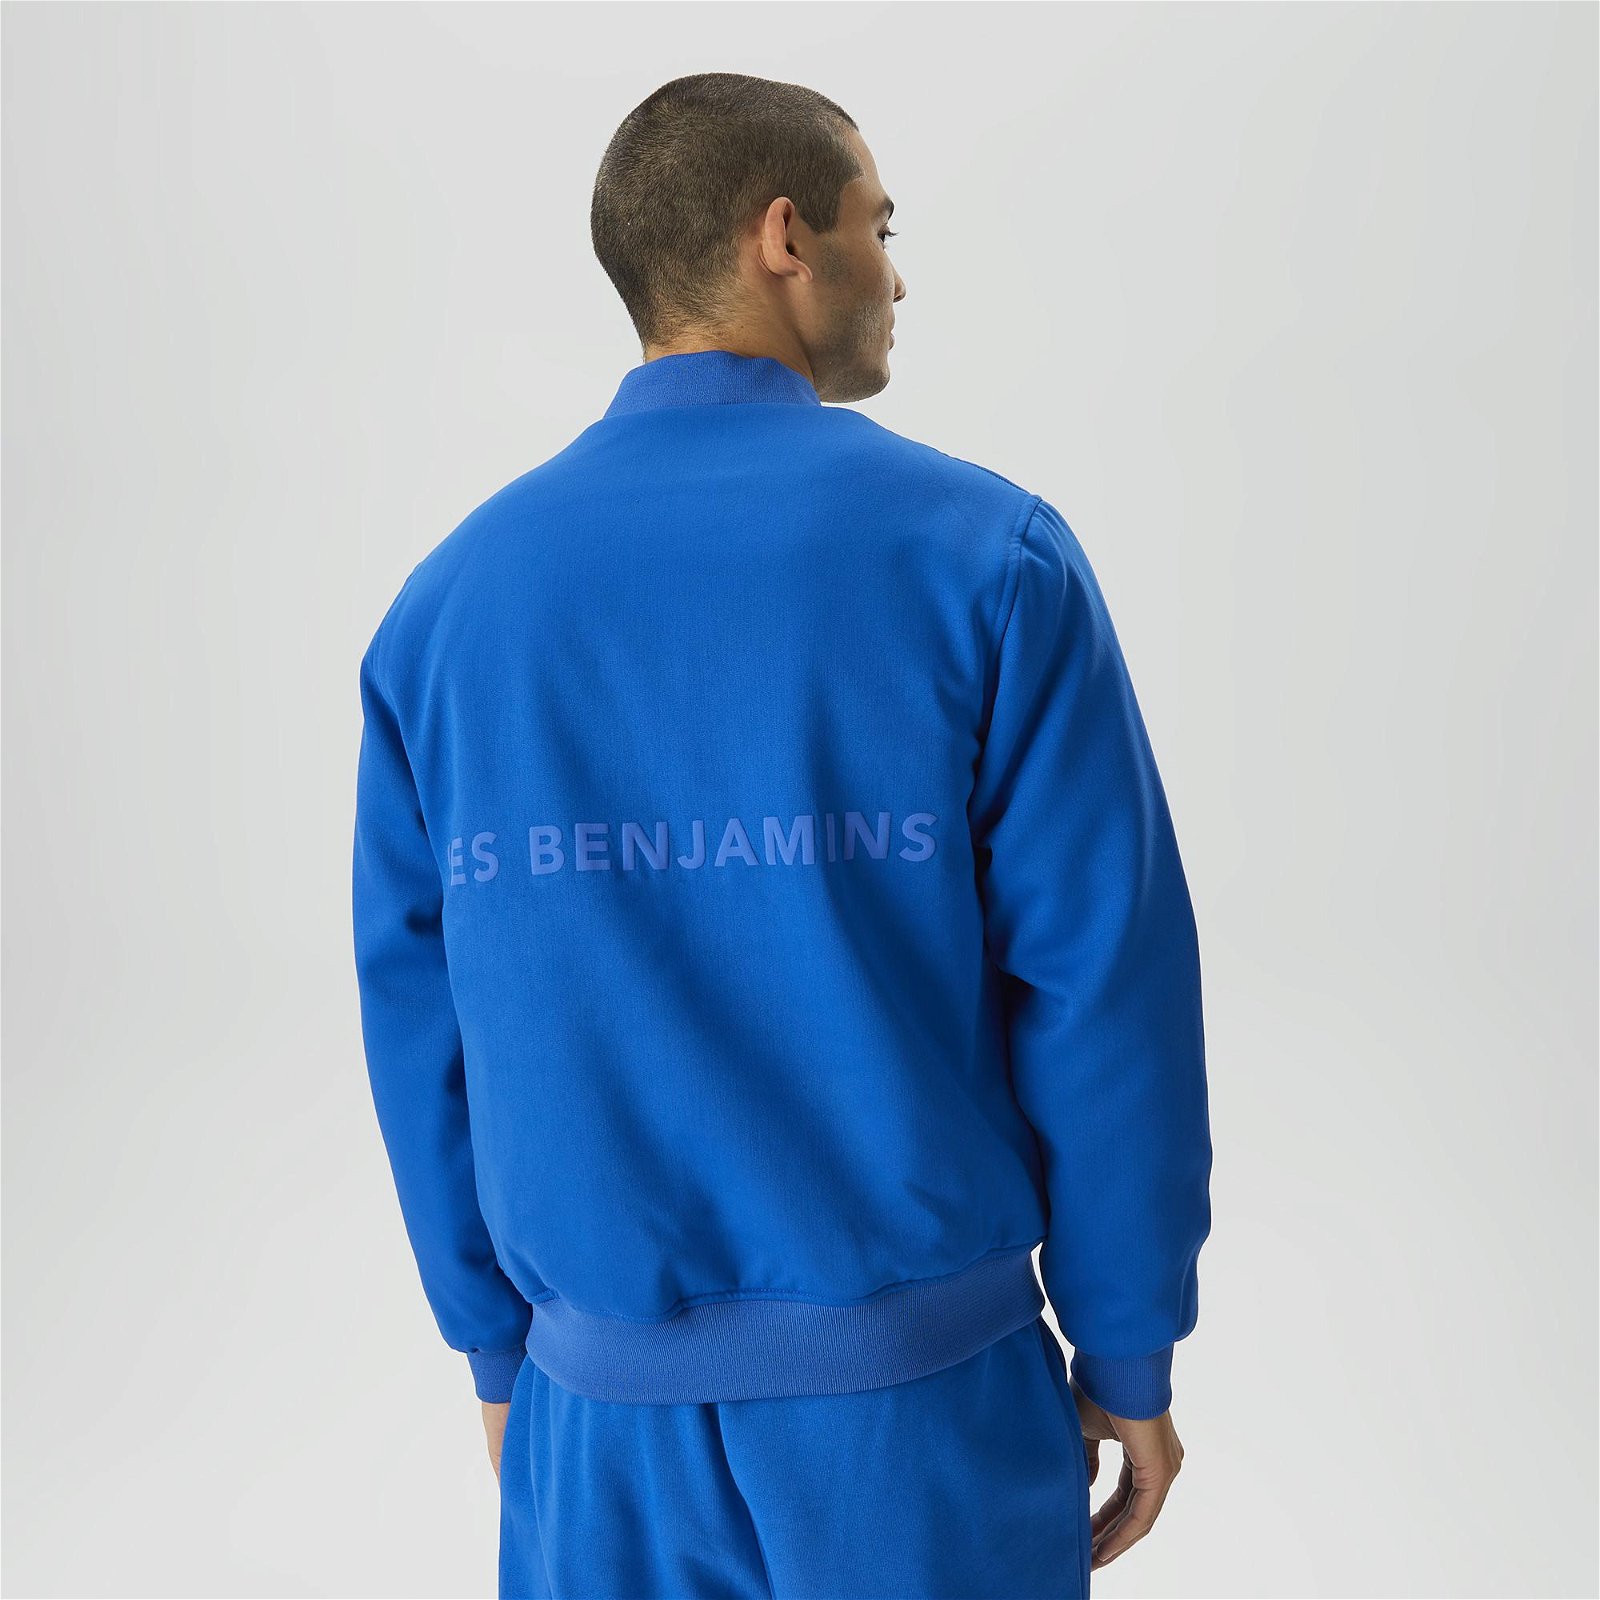 Les Benjamins Bomber 302 Erkek Mavi Ceket